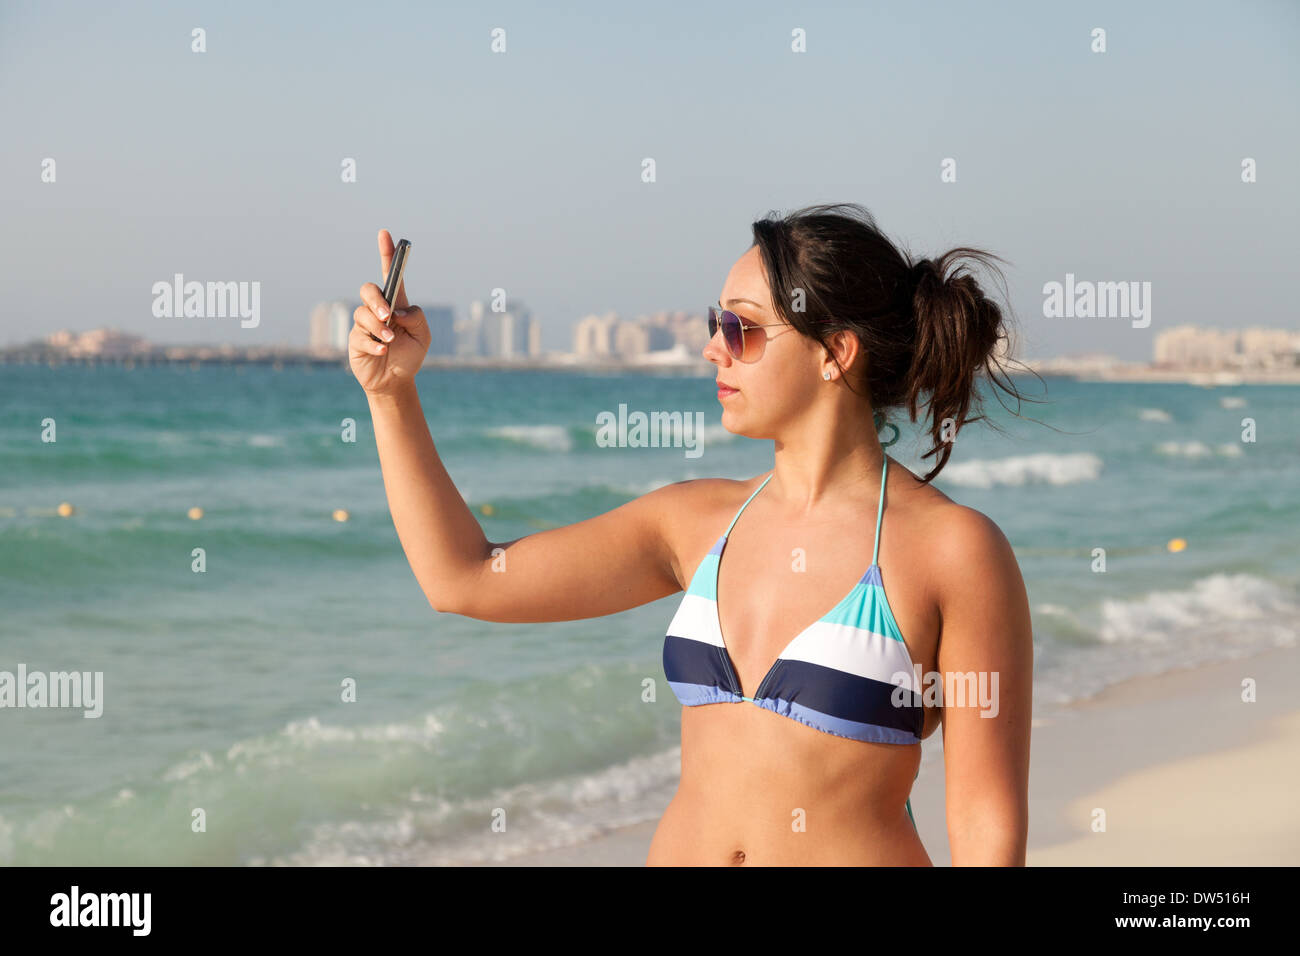 Arabic Hot Girl Selfie